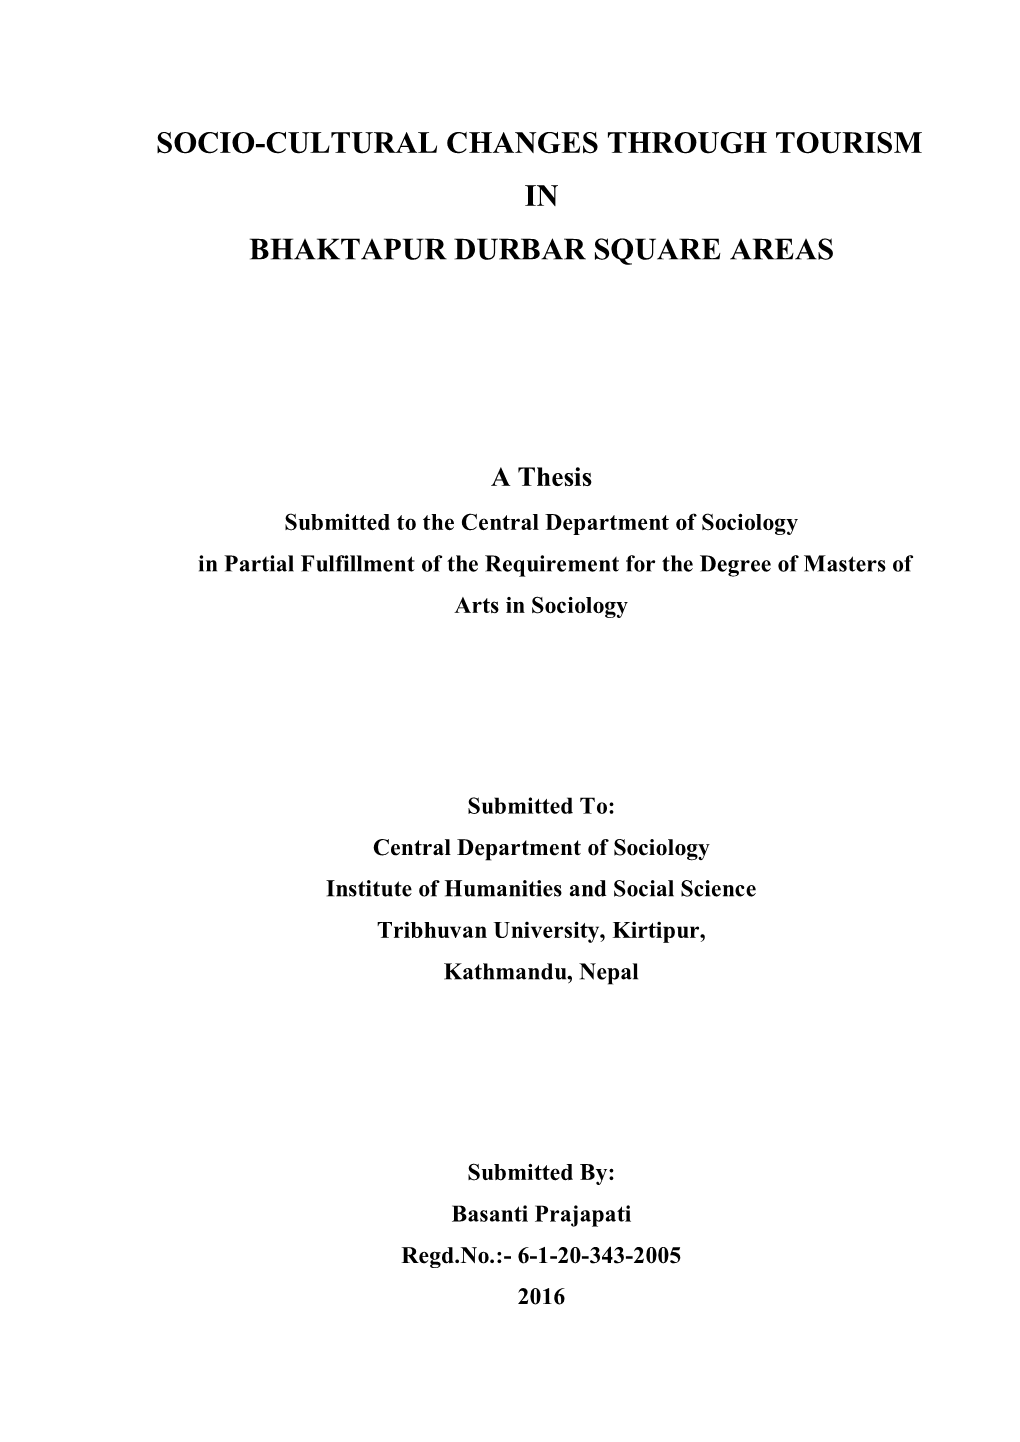 Socio-Cultural Changes Through Tourism in Bhaktapur Durbar Square Areas